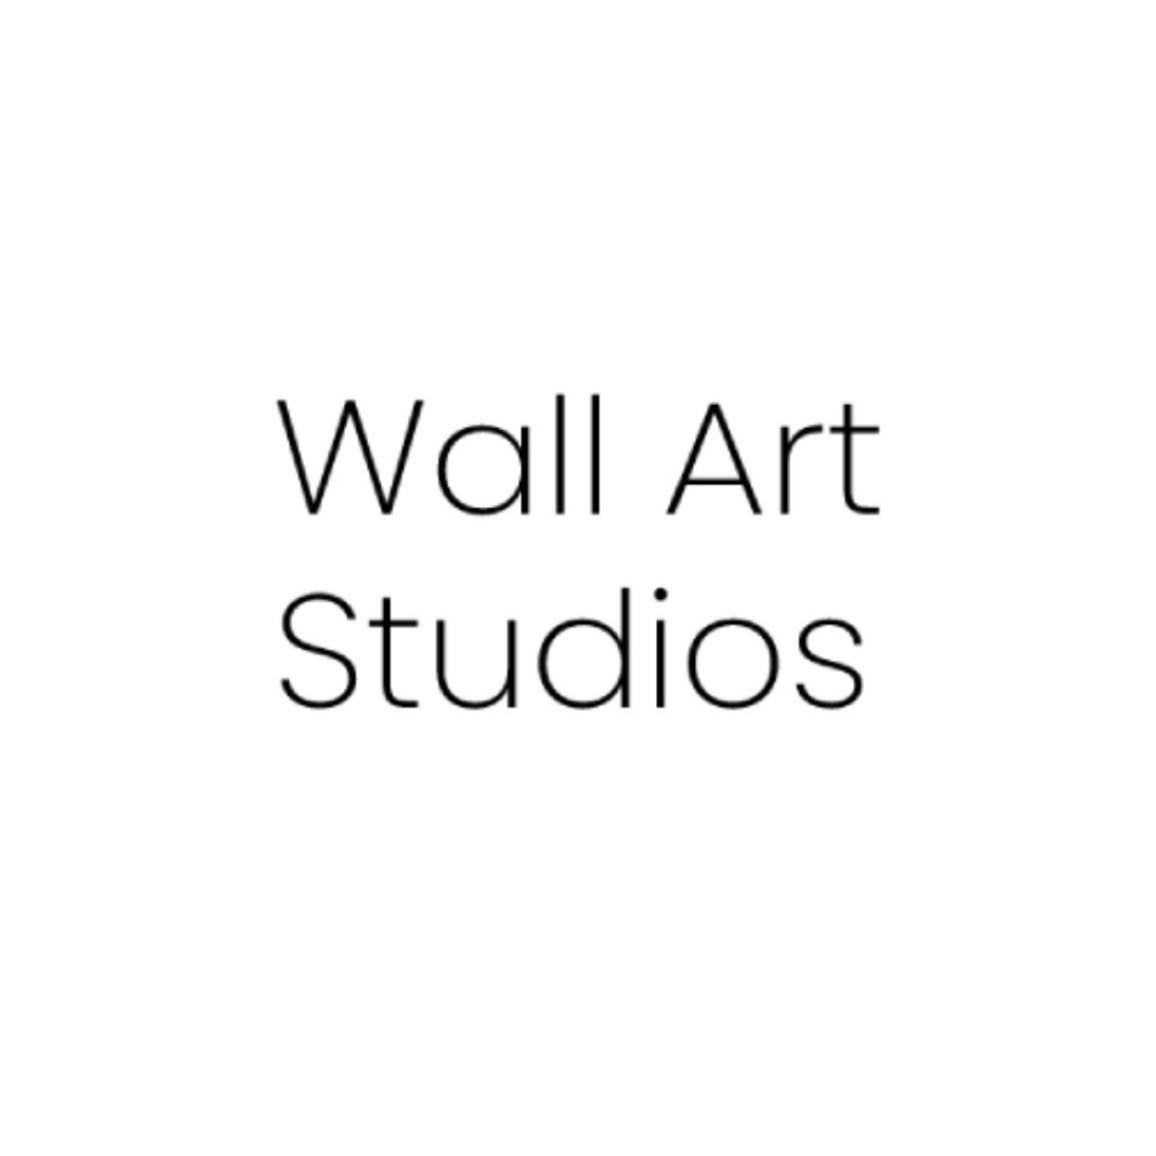 WALL ART STUDIOS logo